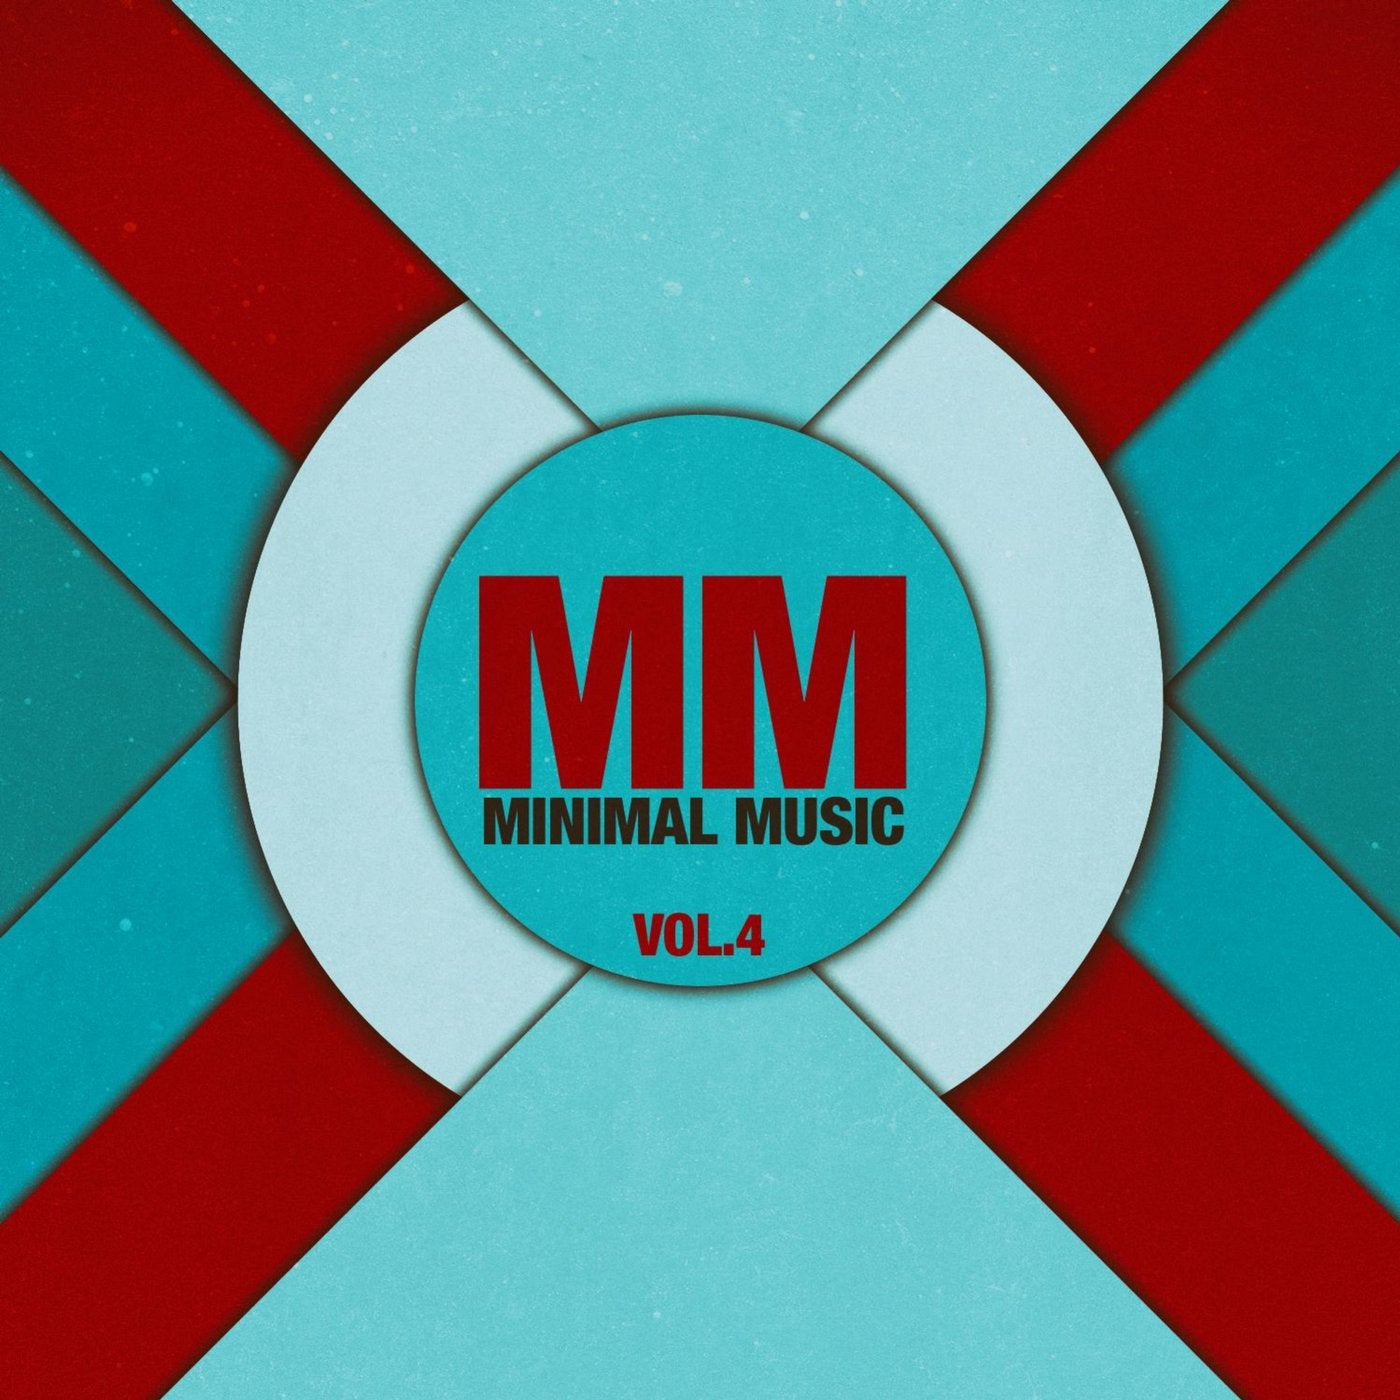 Mm Minimal Music, Vol. 4